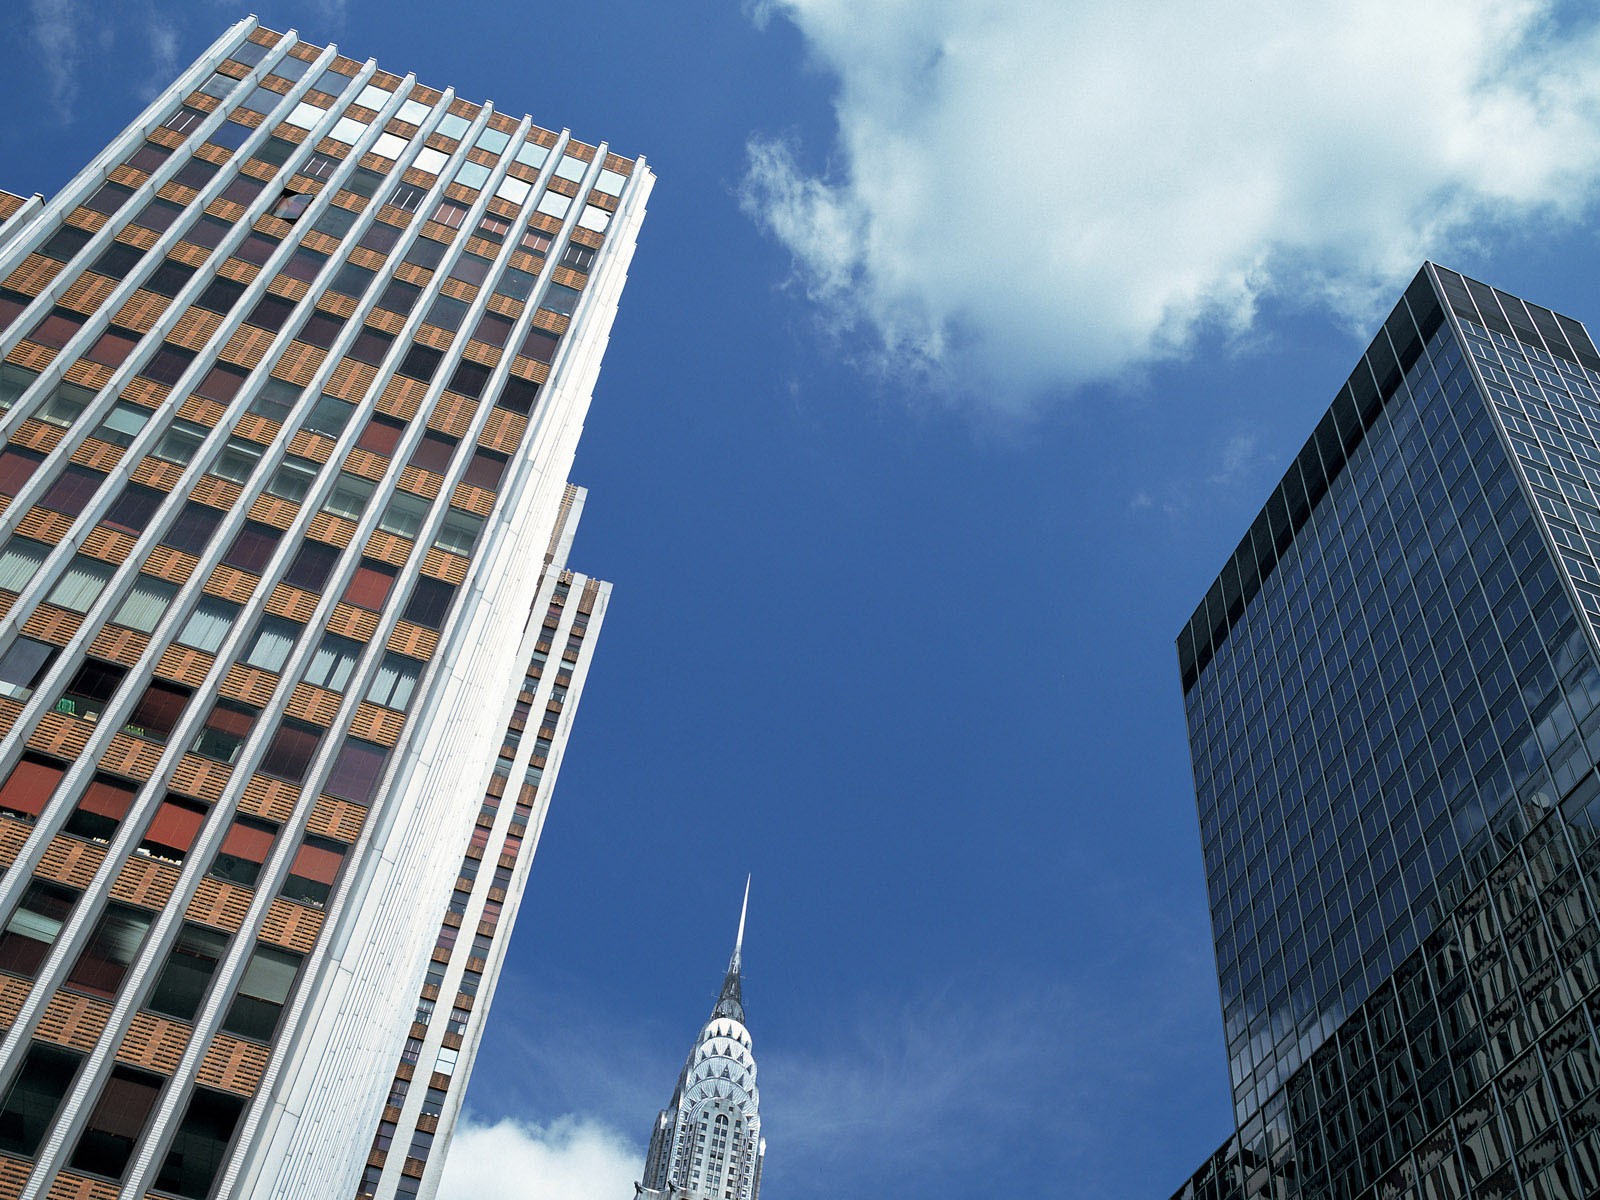 Quirligen Stadt New York Building #4 - 1600x1200